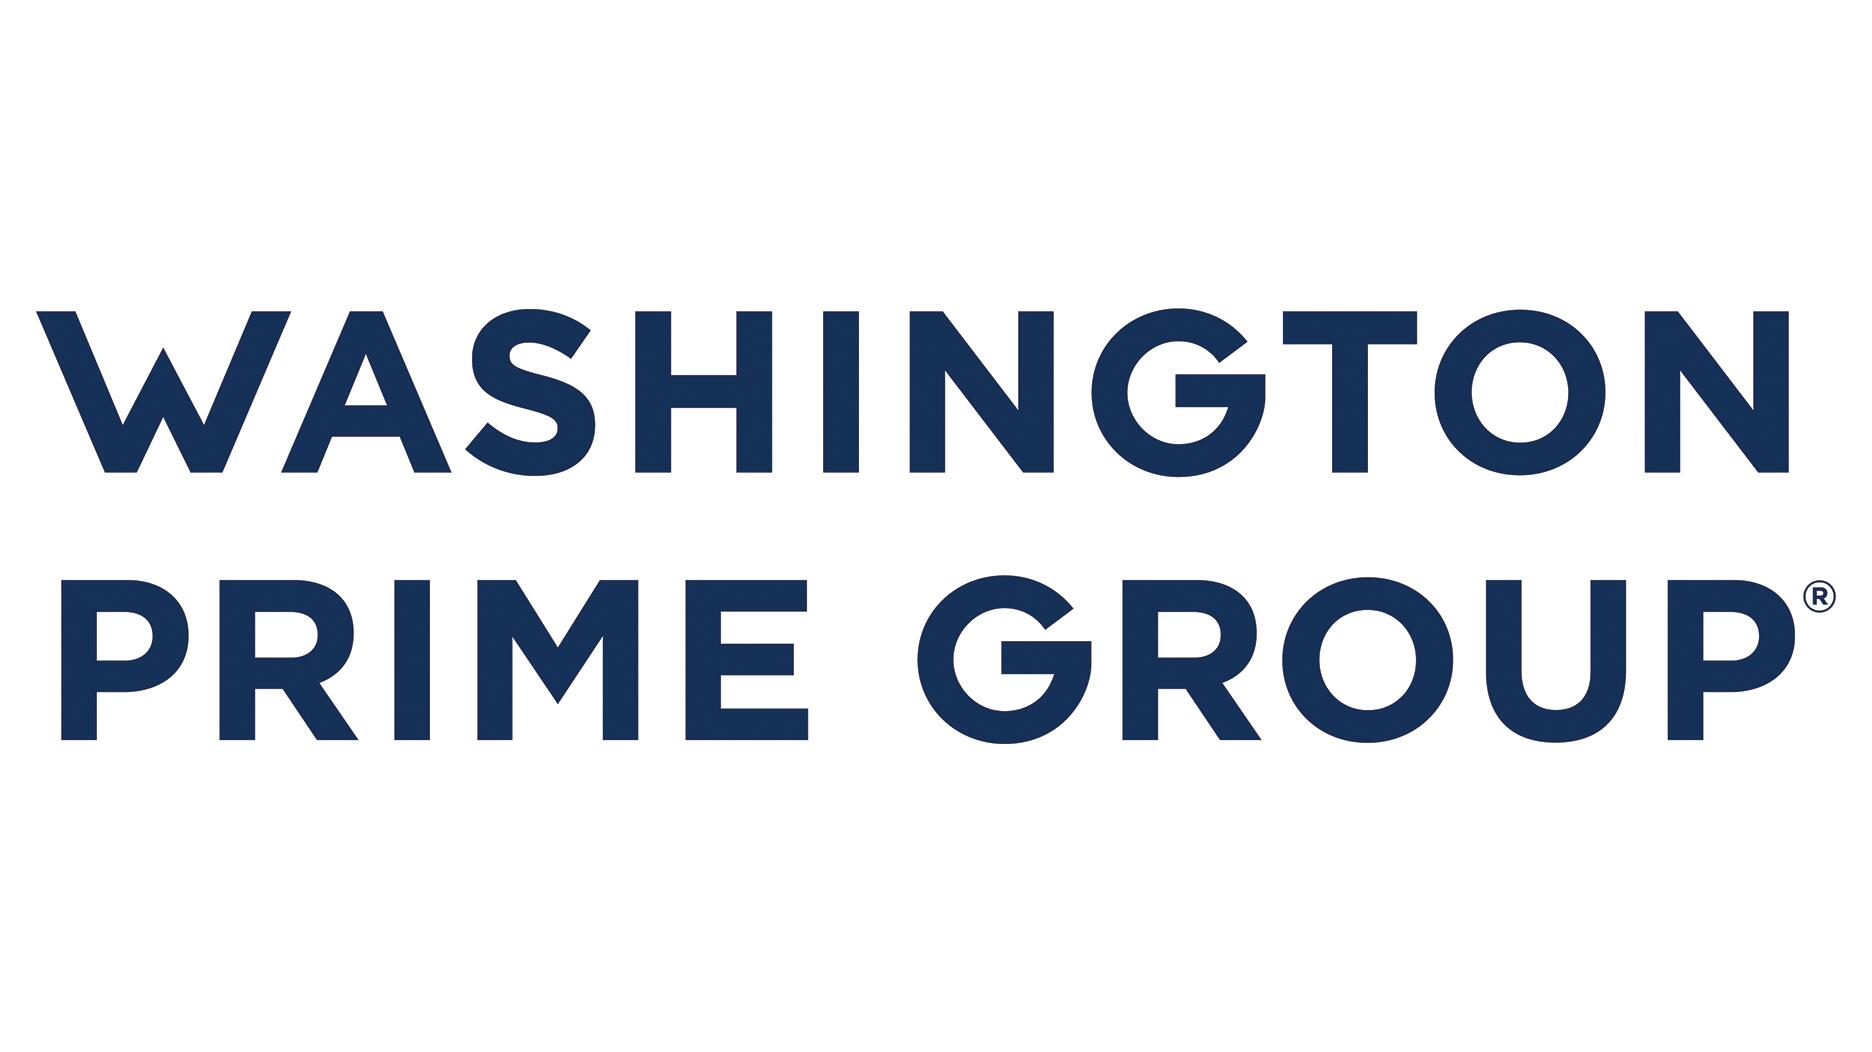 20210617_Washington Prime Group Logo.jpg